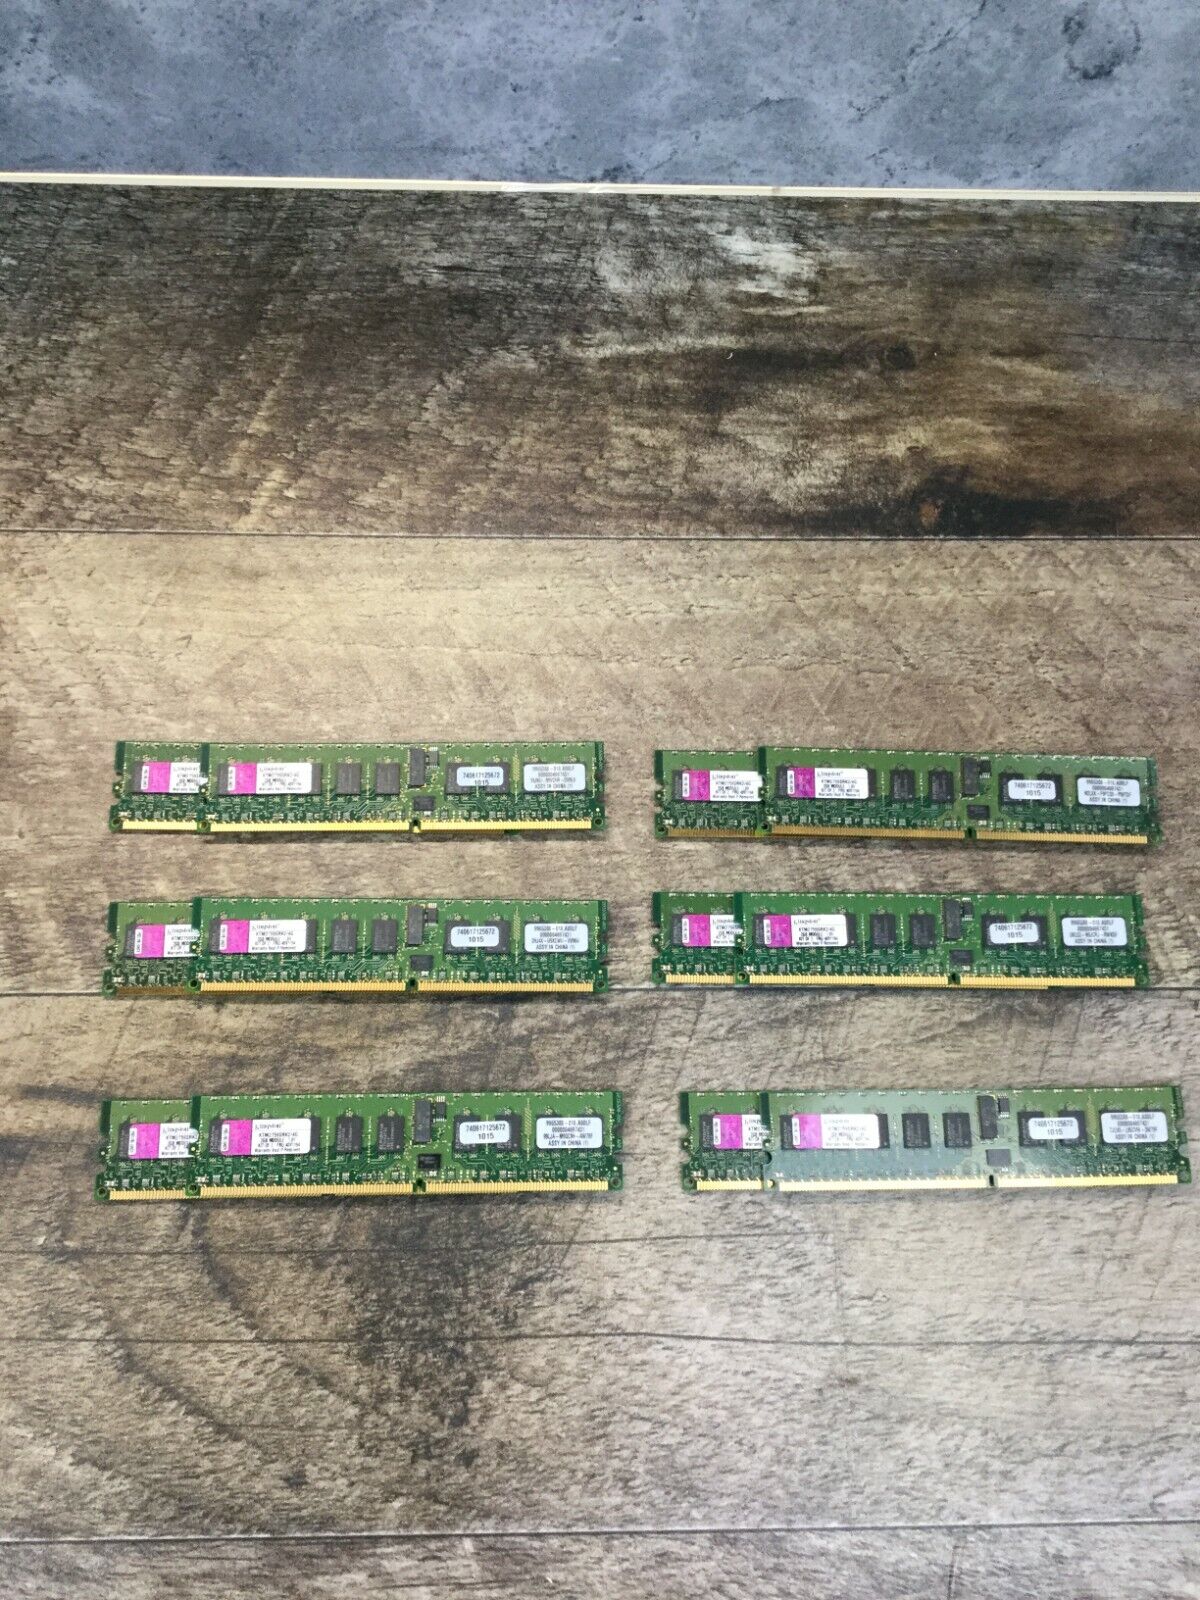 Lot of 6 RAM Kit of 2 Kingston ktm2759srk2/4g 24GB (6x4GB) From working system